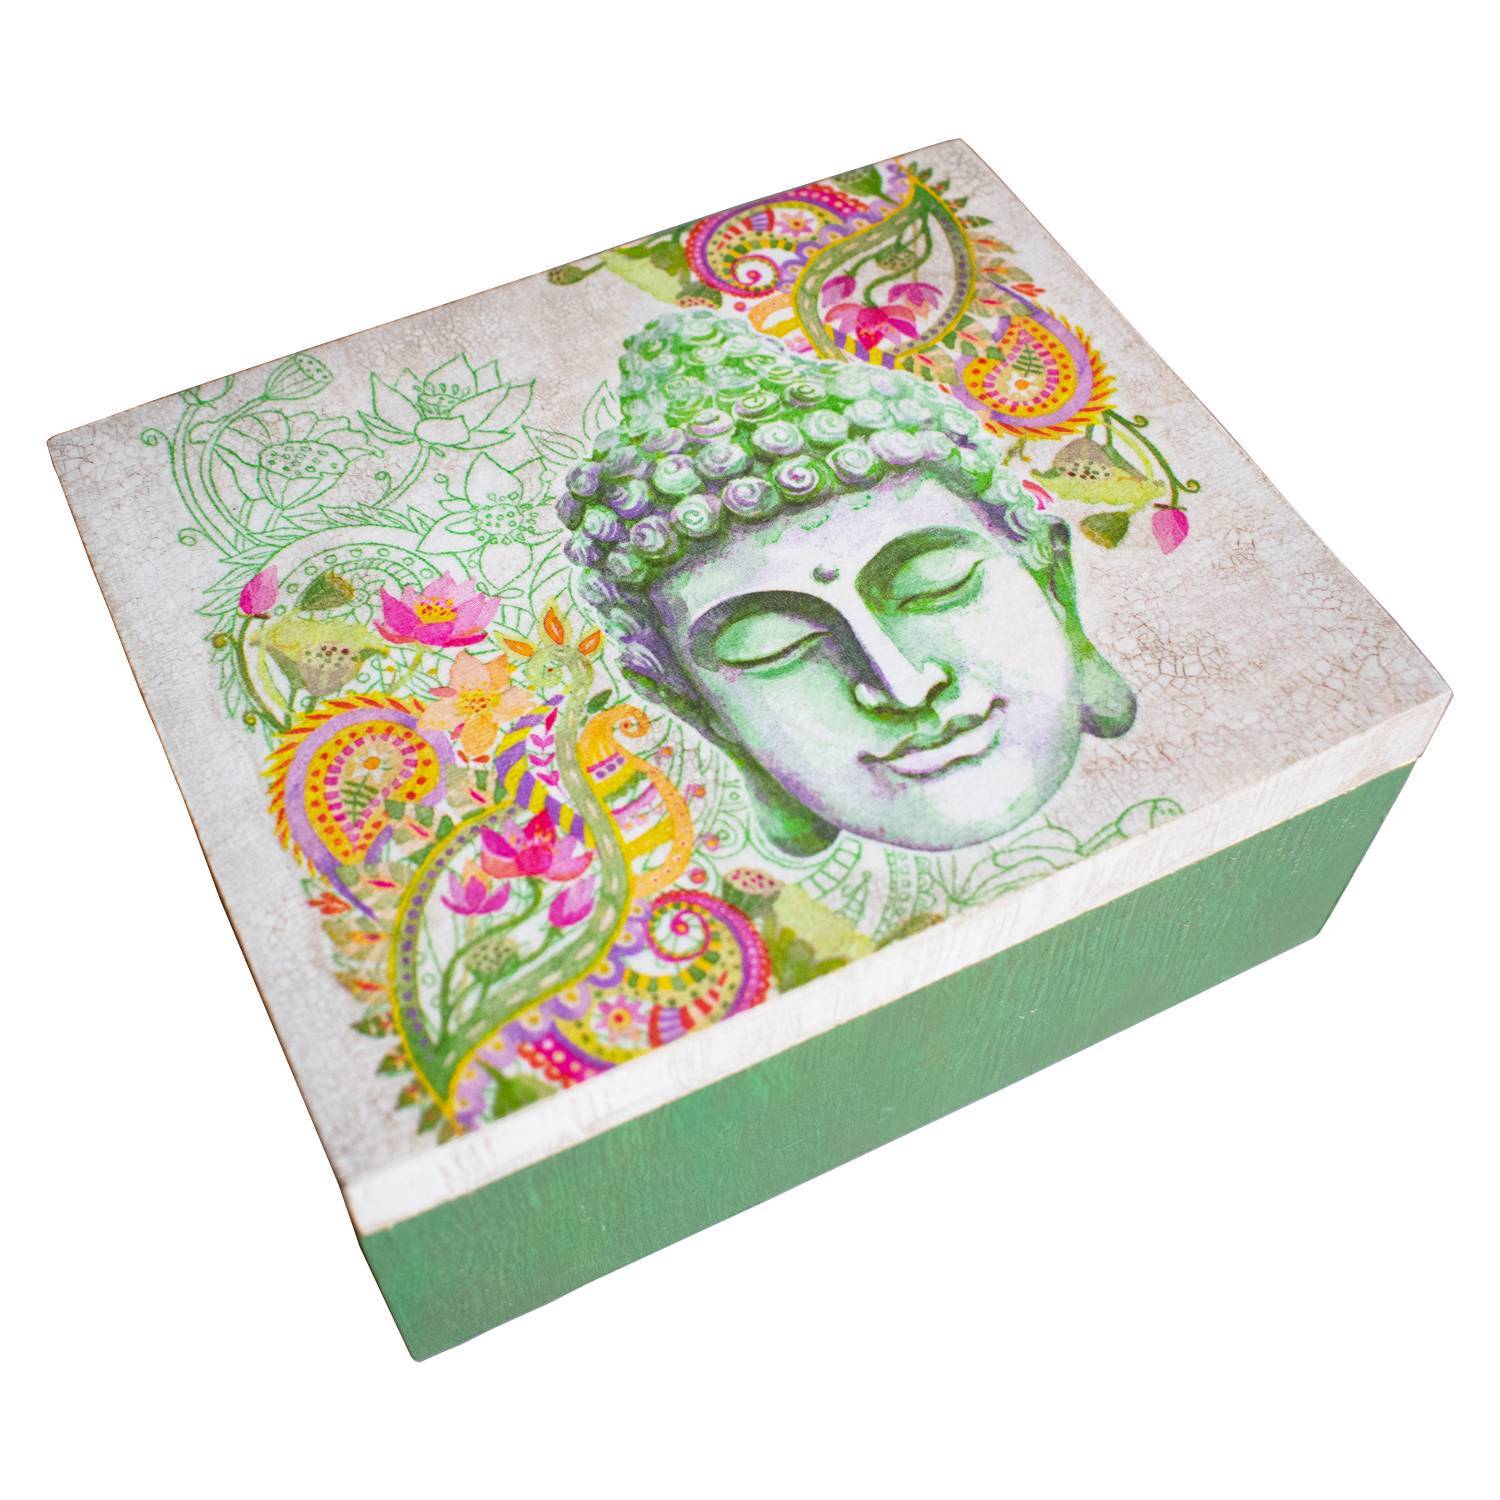 Krafty Koala - Jade Buddha - Tea Box Side